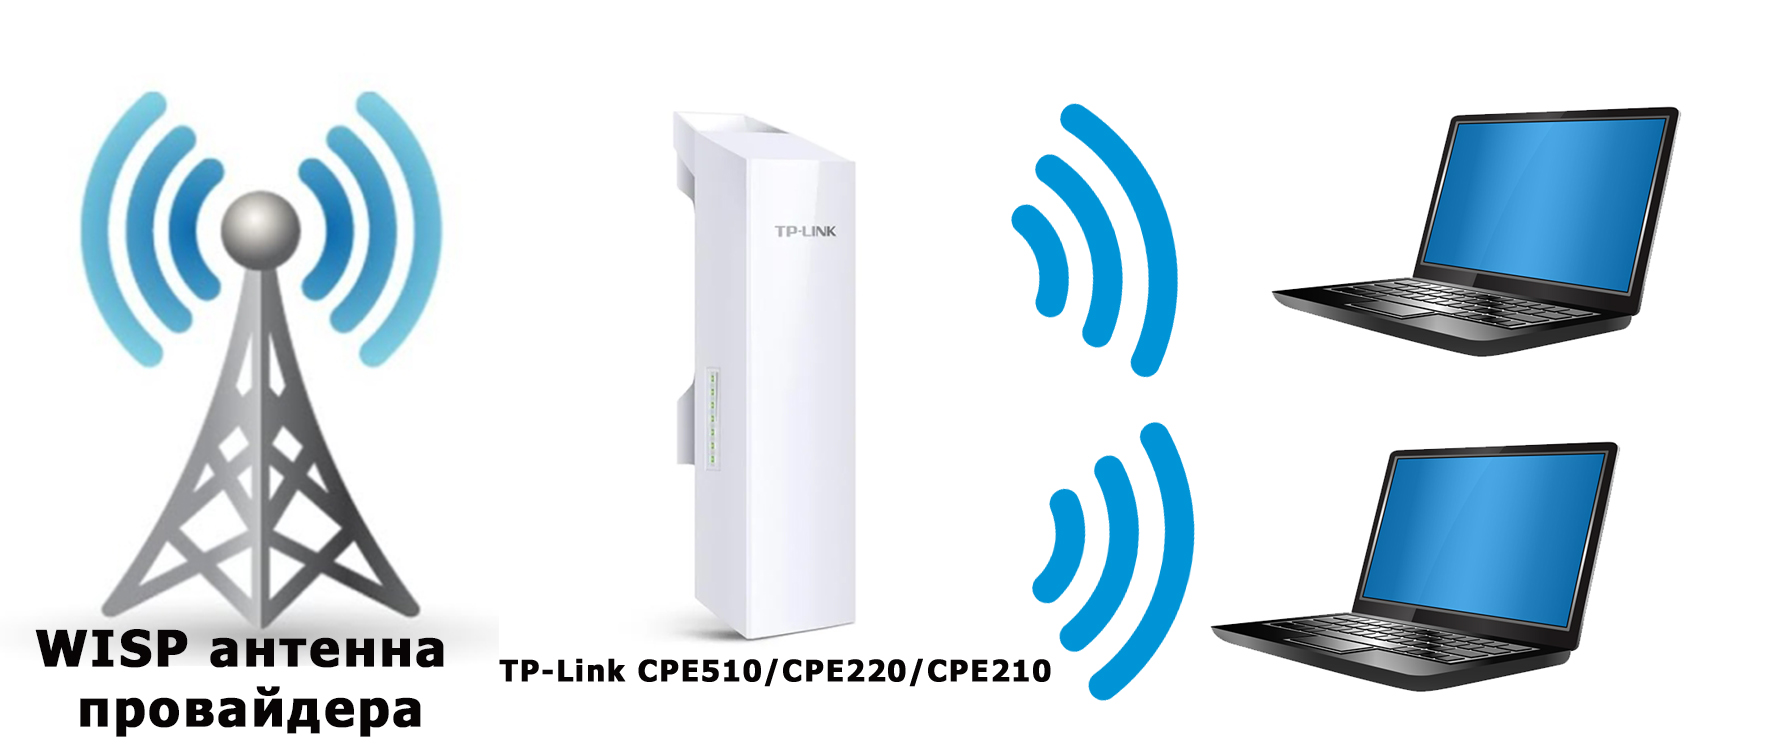 Обзор и настройка точек доступа TP-Link CPE510 (CPE520/CPE220/CPE210)